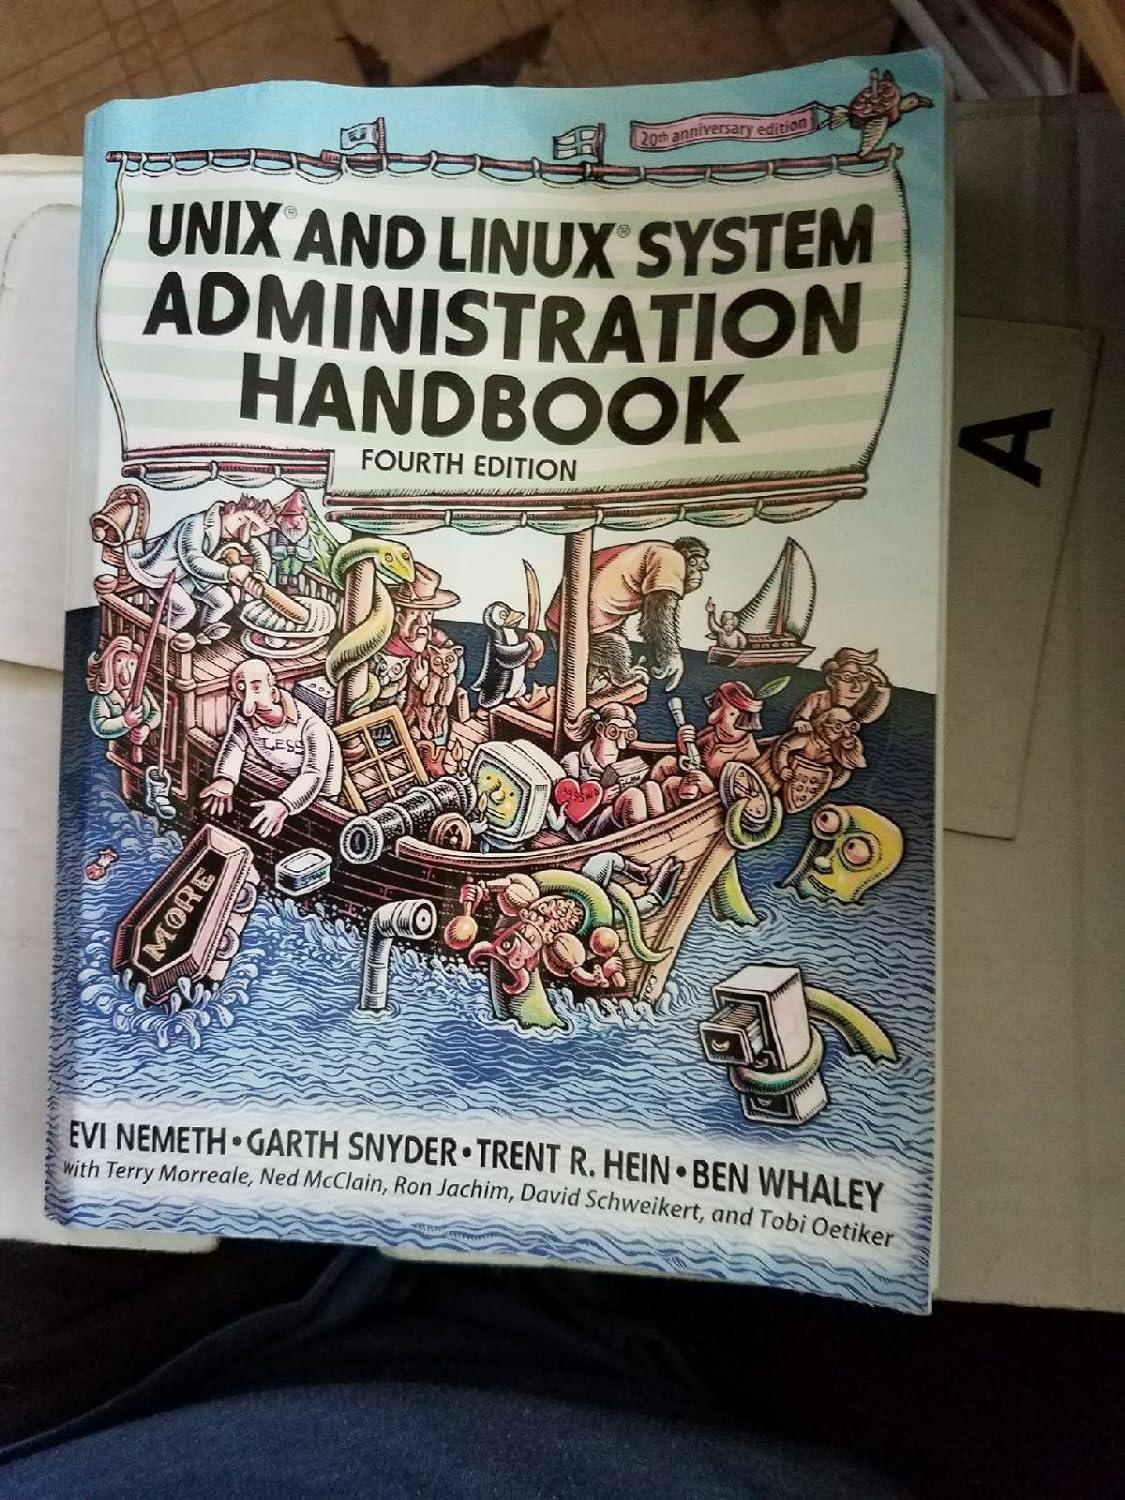 unix and linux system administration handbook 4th edition evi nemeth, garth snyder, trent r. hein, ben